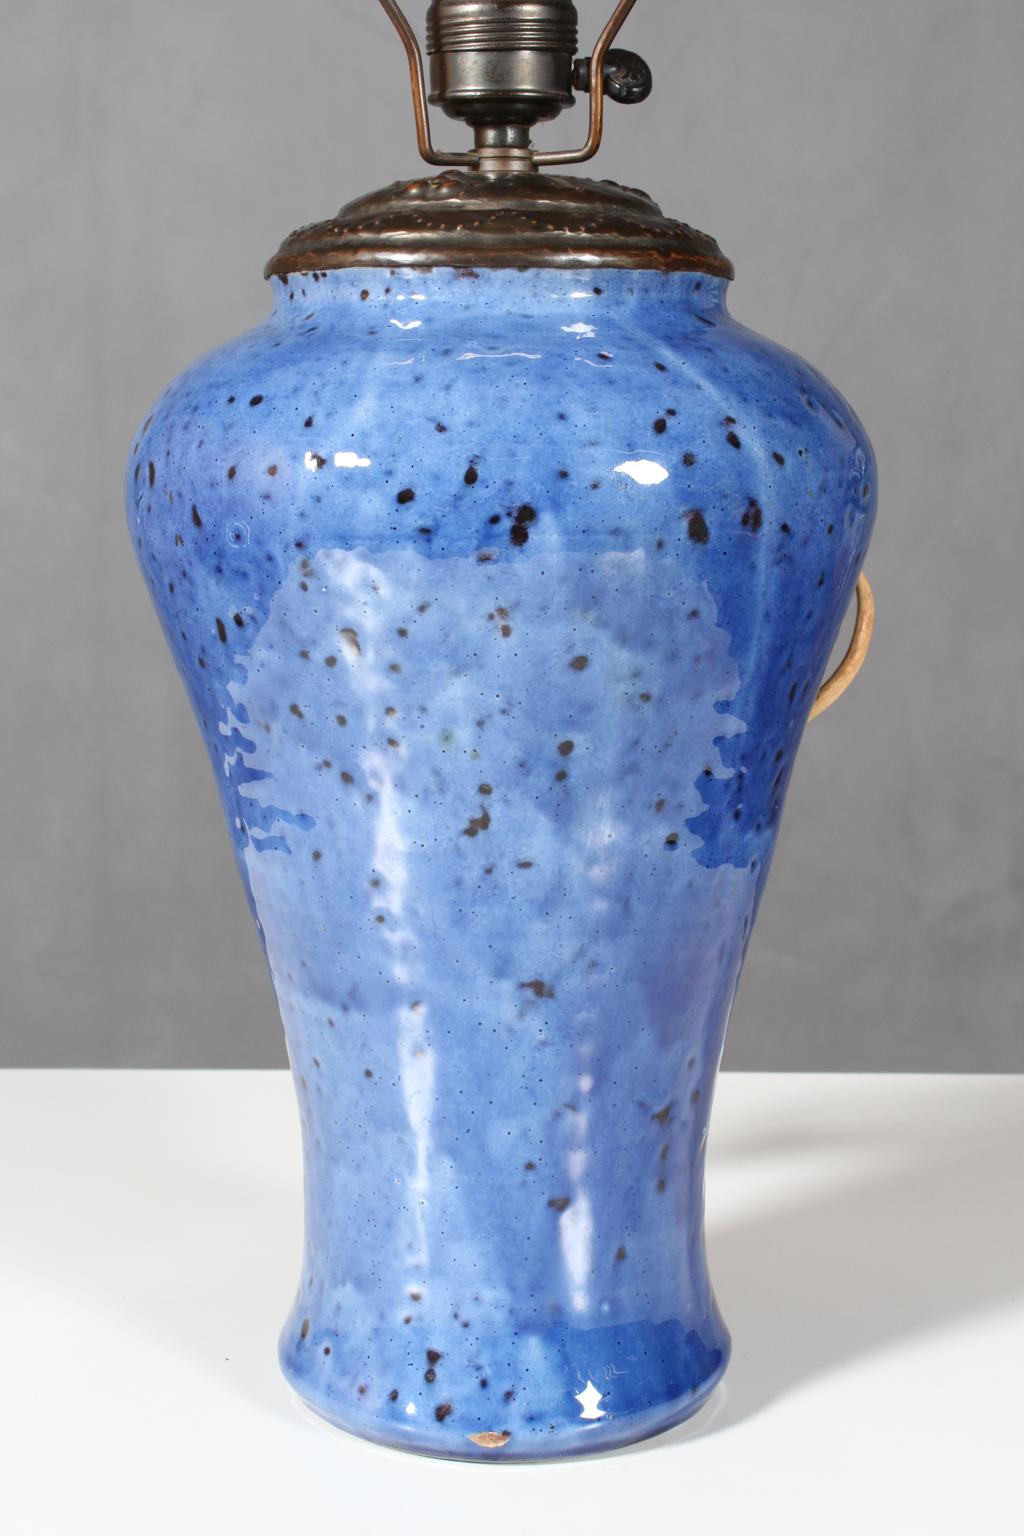 Herman A. Kähler table lamp in blue glazed ceramic.

Top in bronzed metal and bakelit.